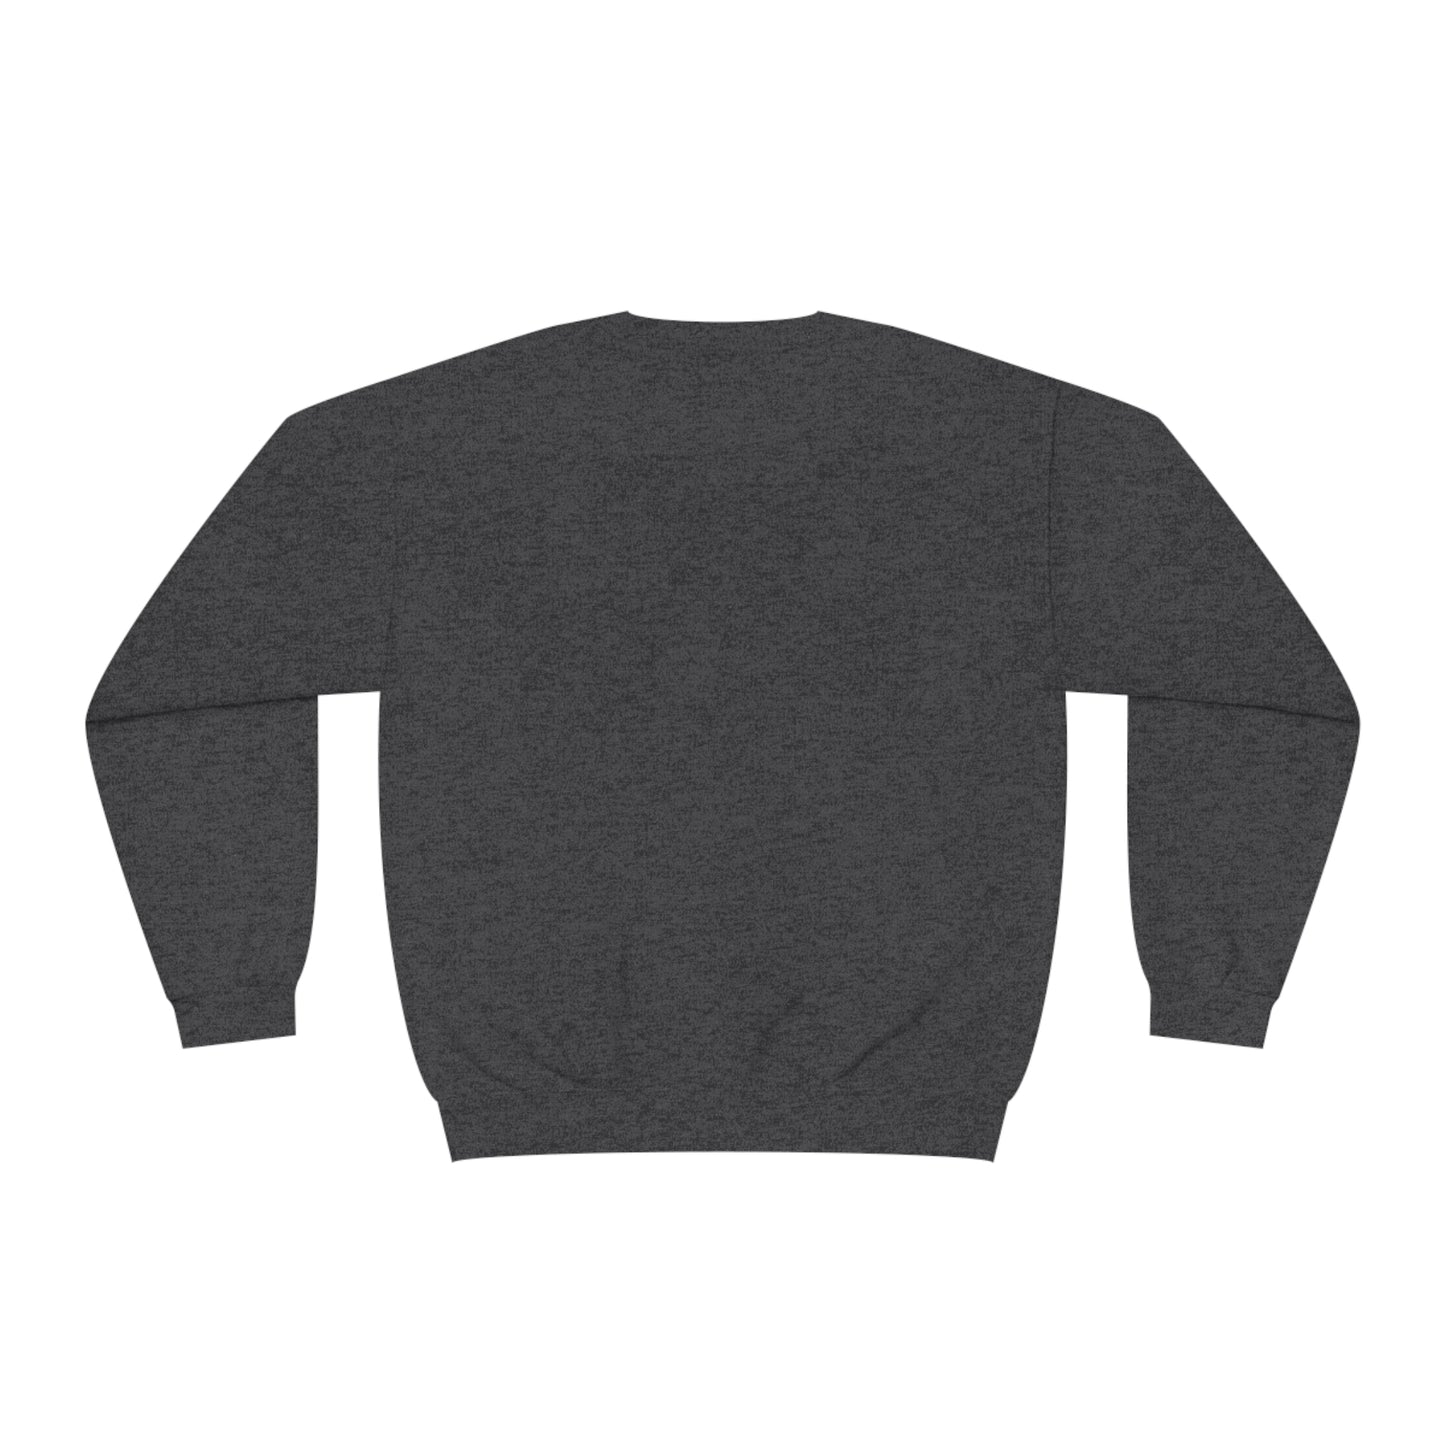 Juneteenth  - Sweatshirt